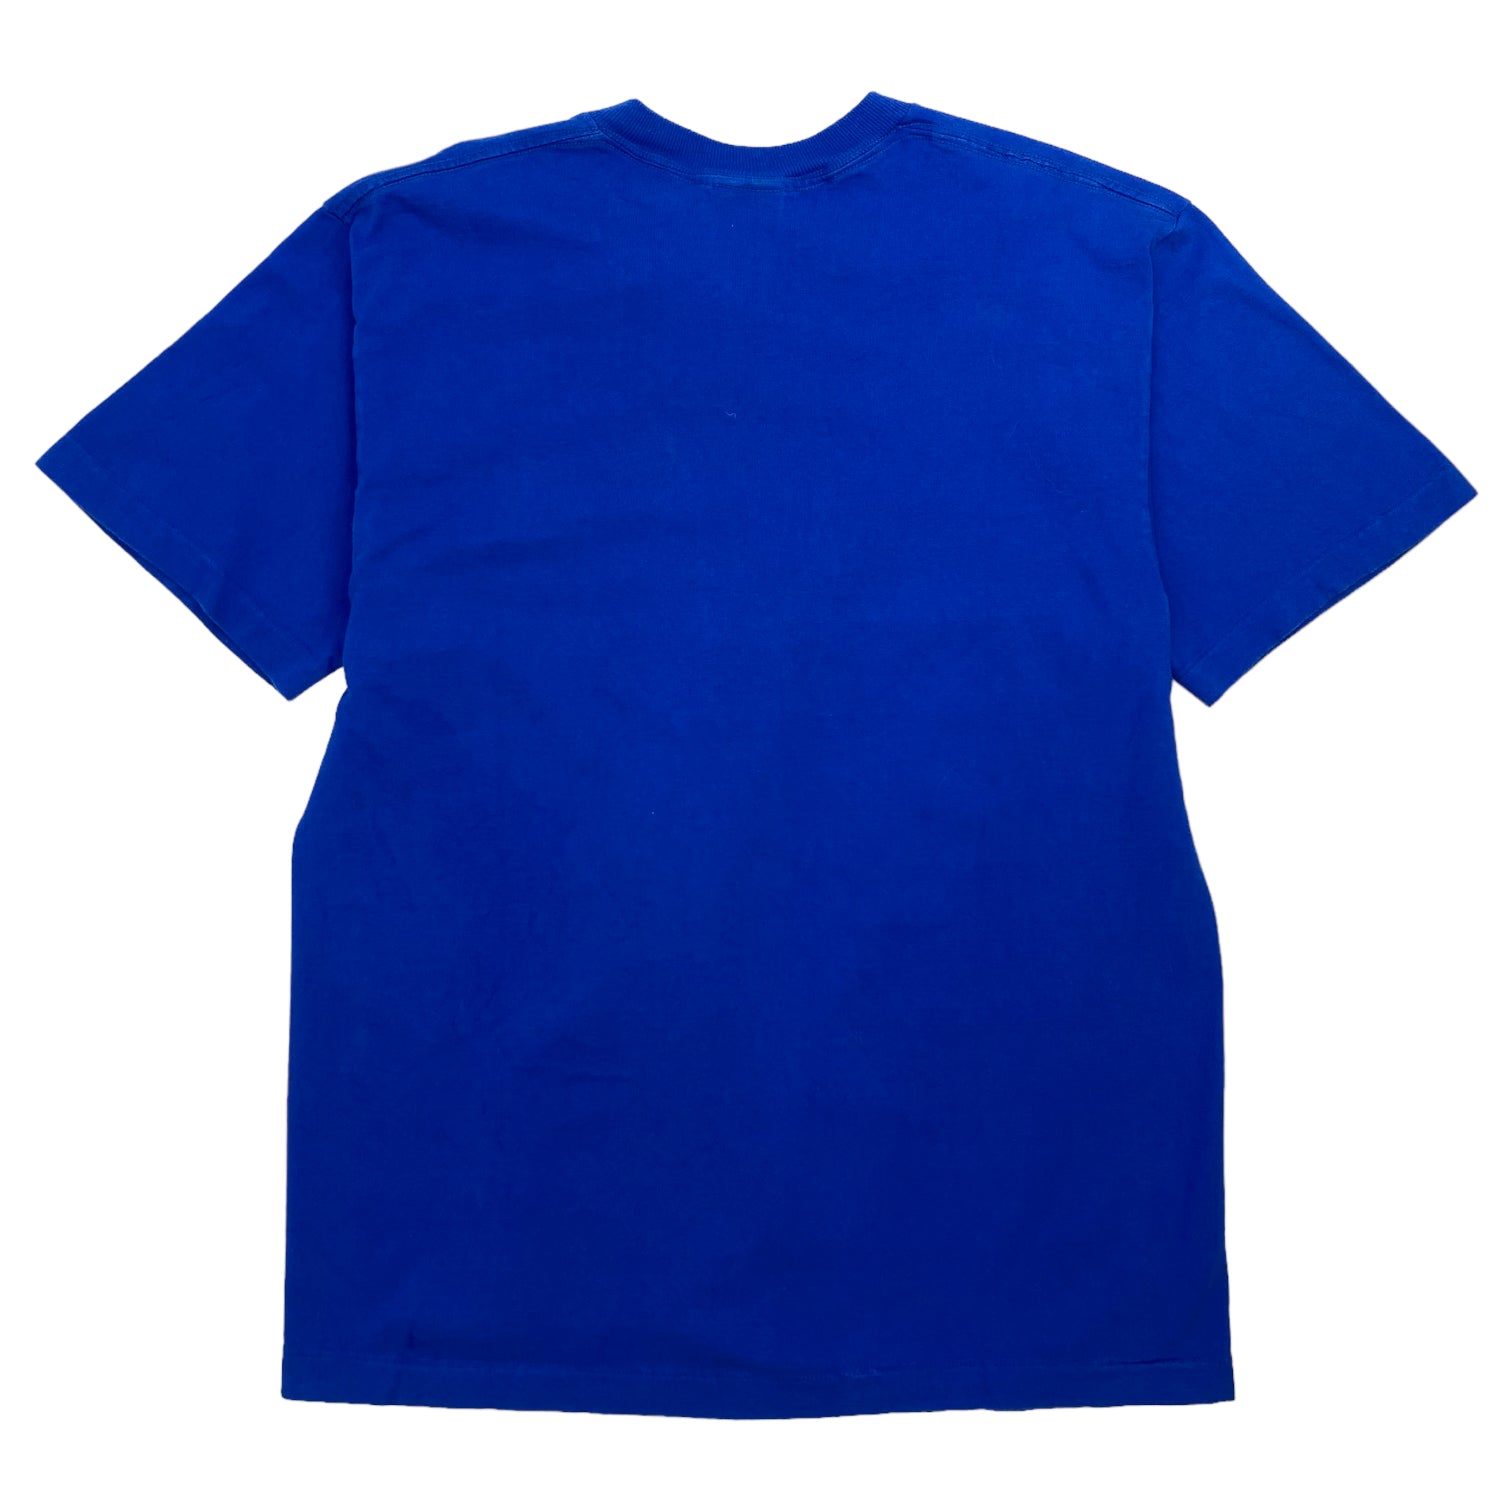 Vintage Mark Messier Pro Player Shirt - Blue & White Shirt